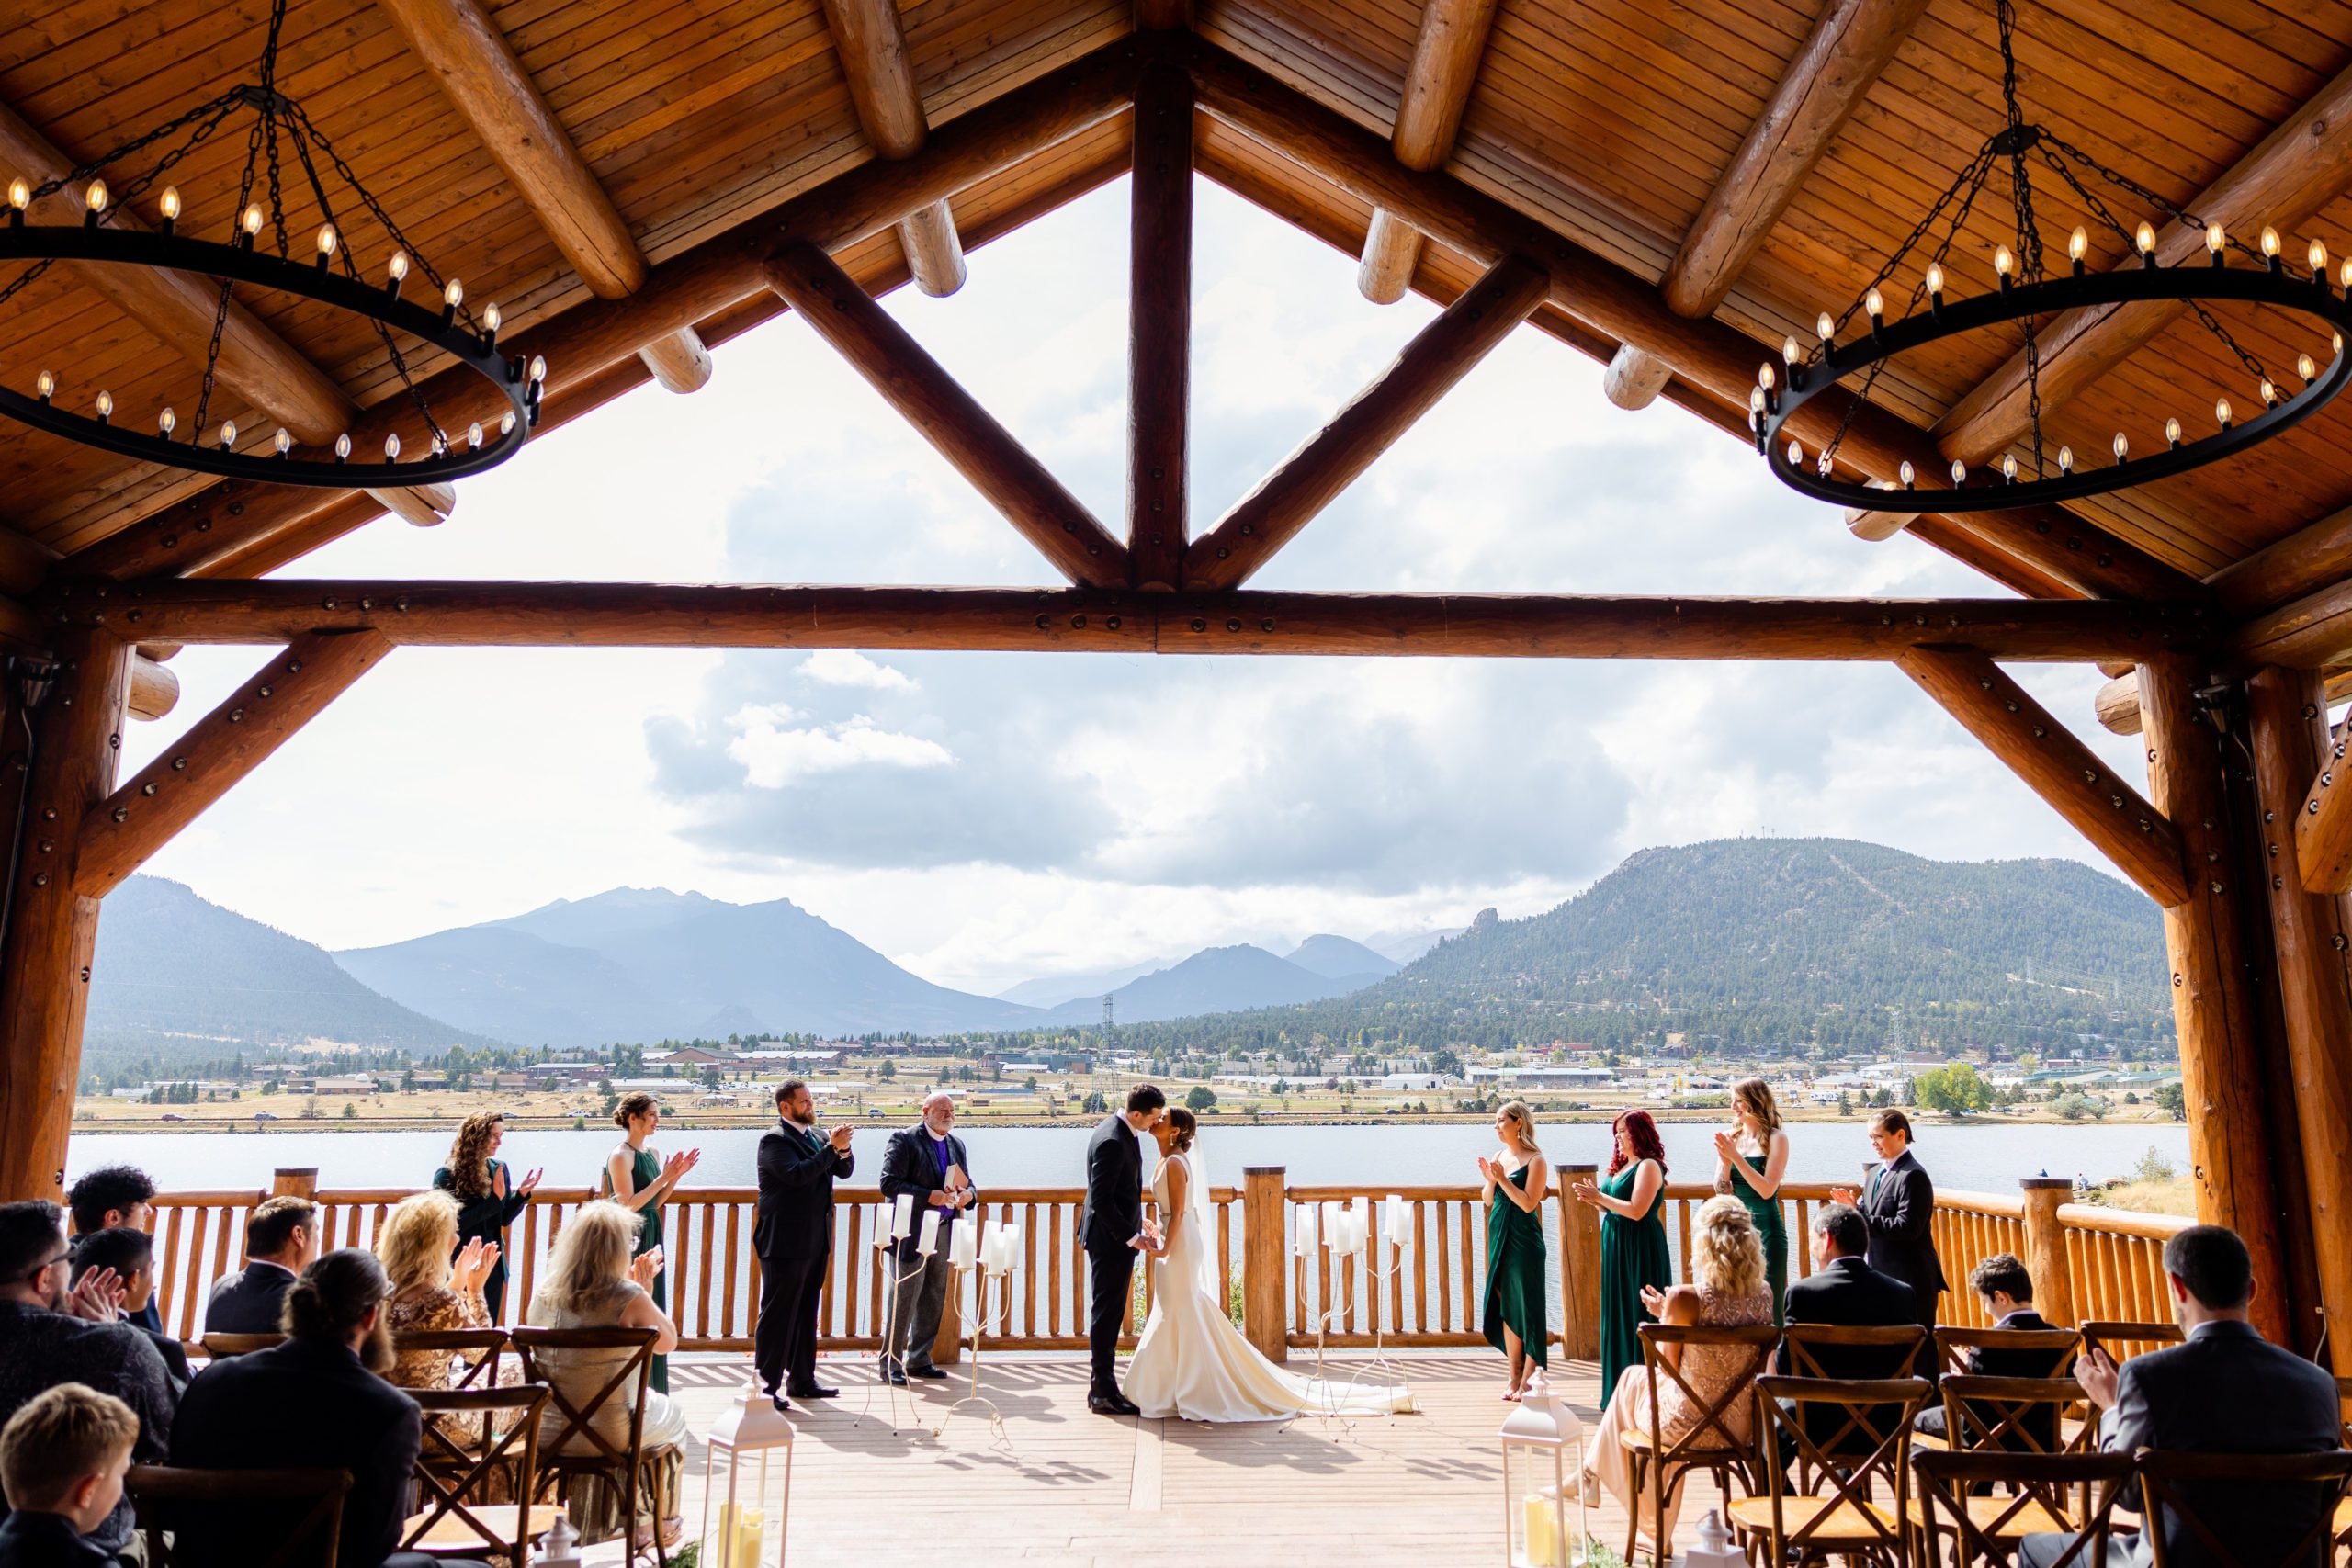 Estes Park Resort wedding ceremony at the lakeside pavilion